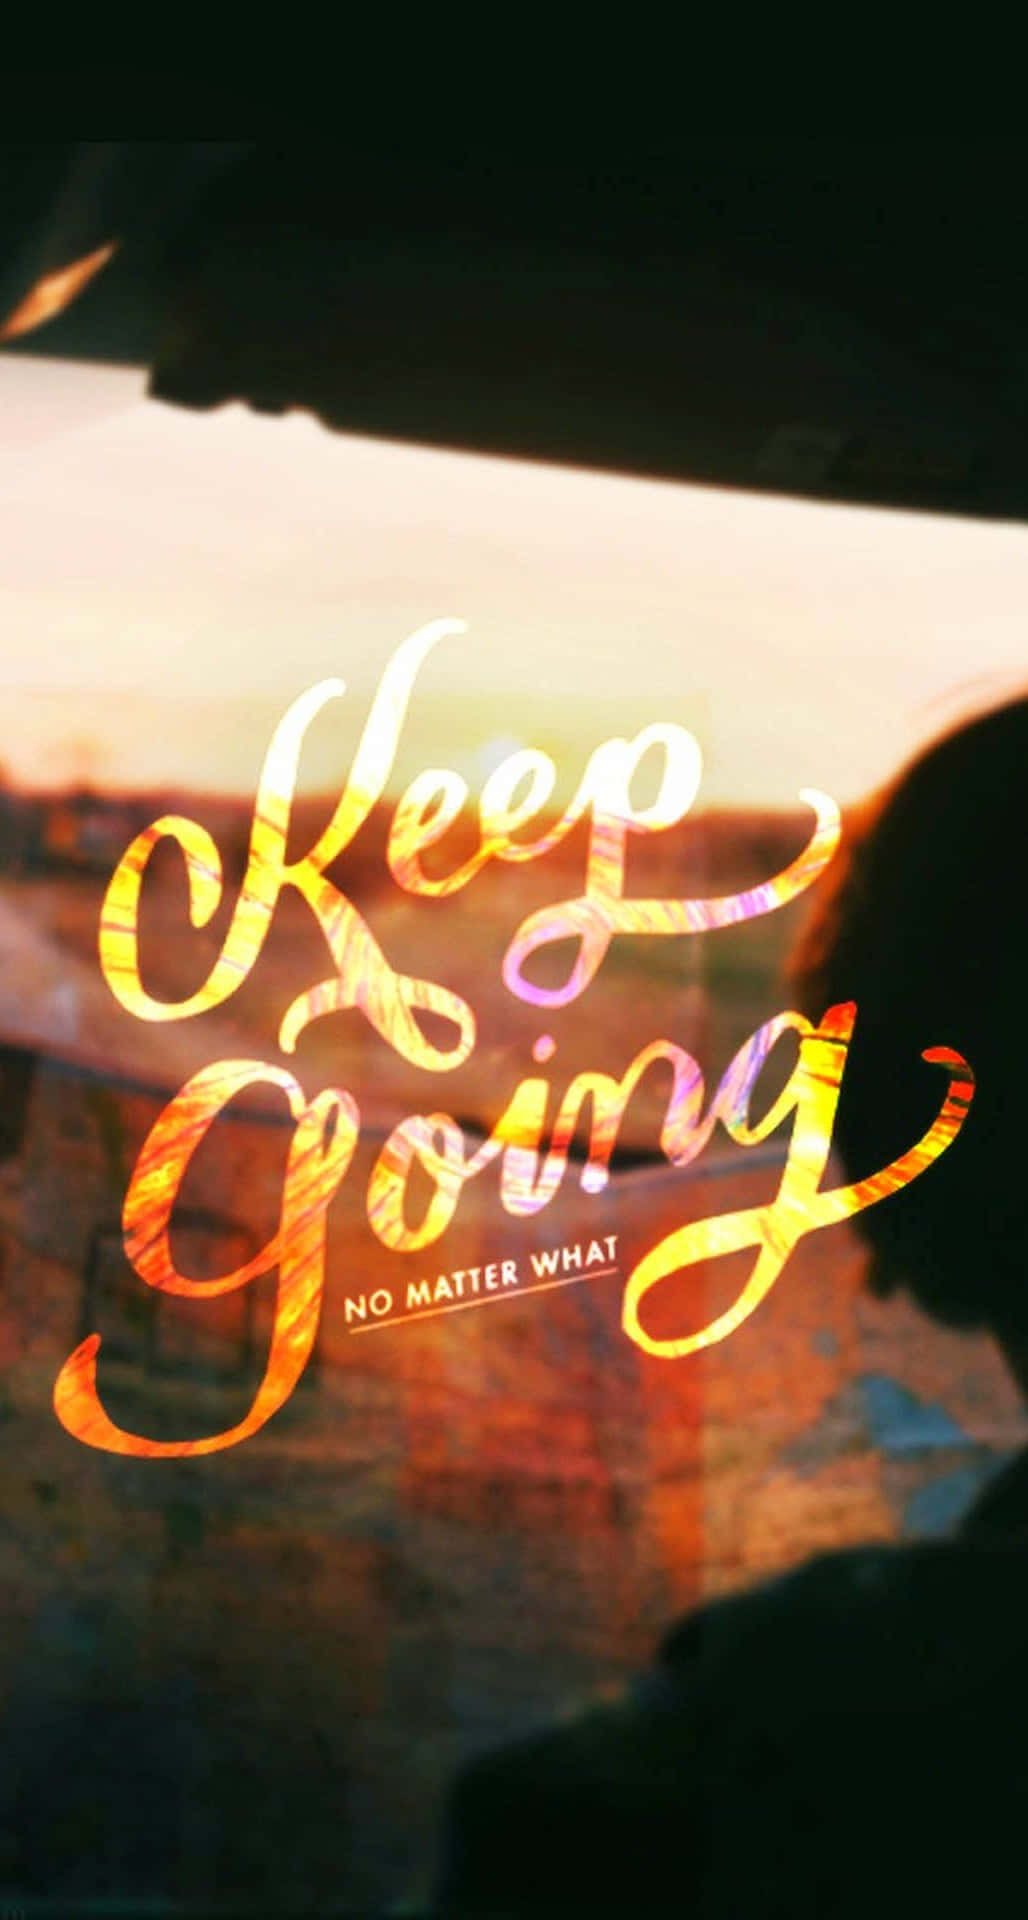 Keep Going - Adobe Illustrator Wallpaper